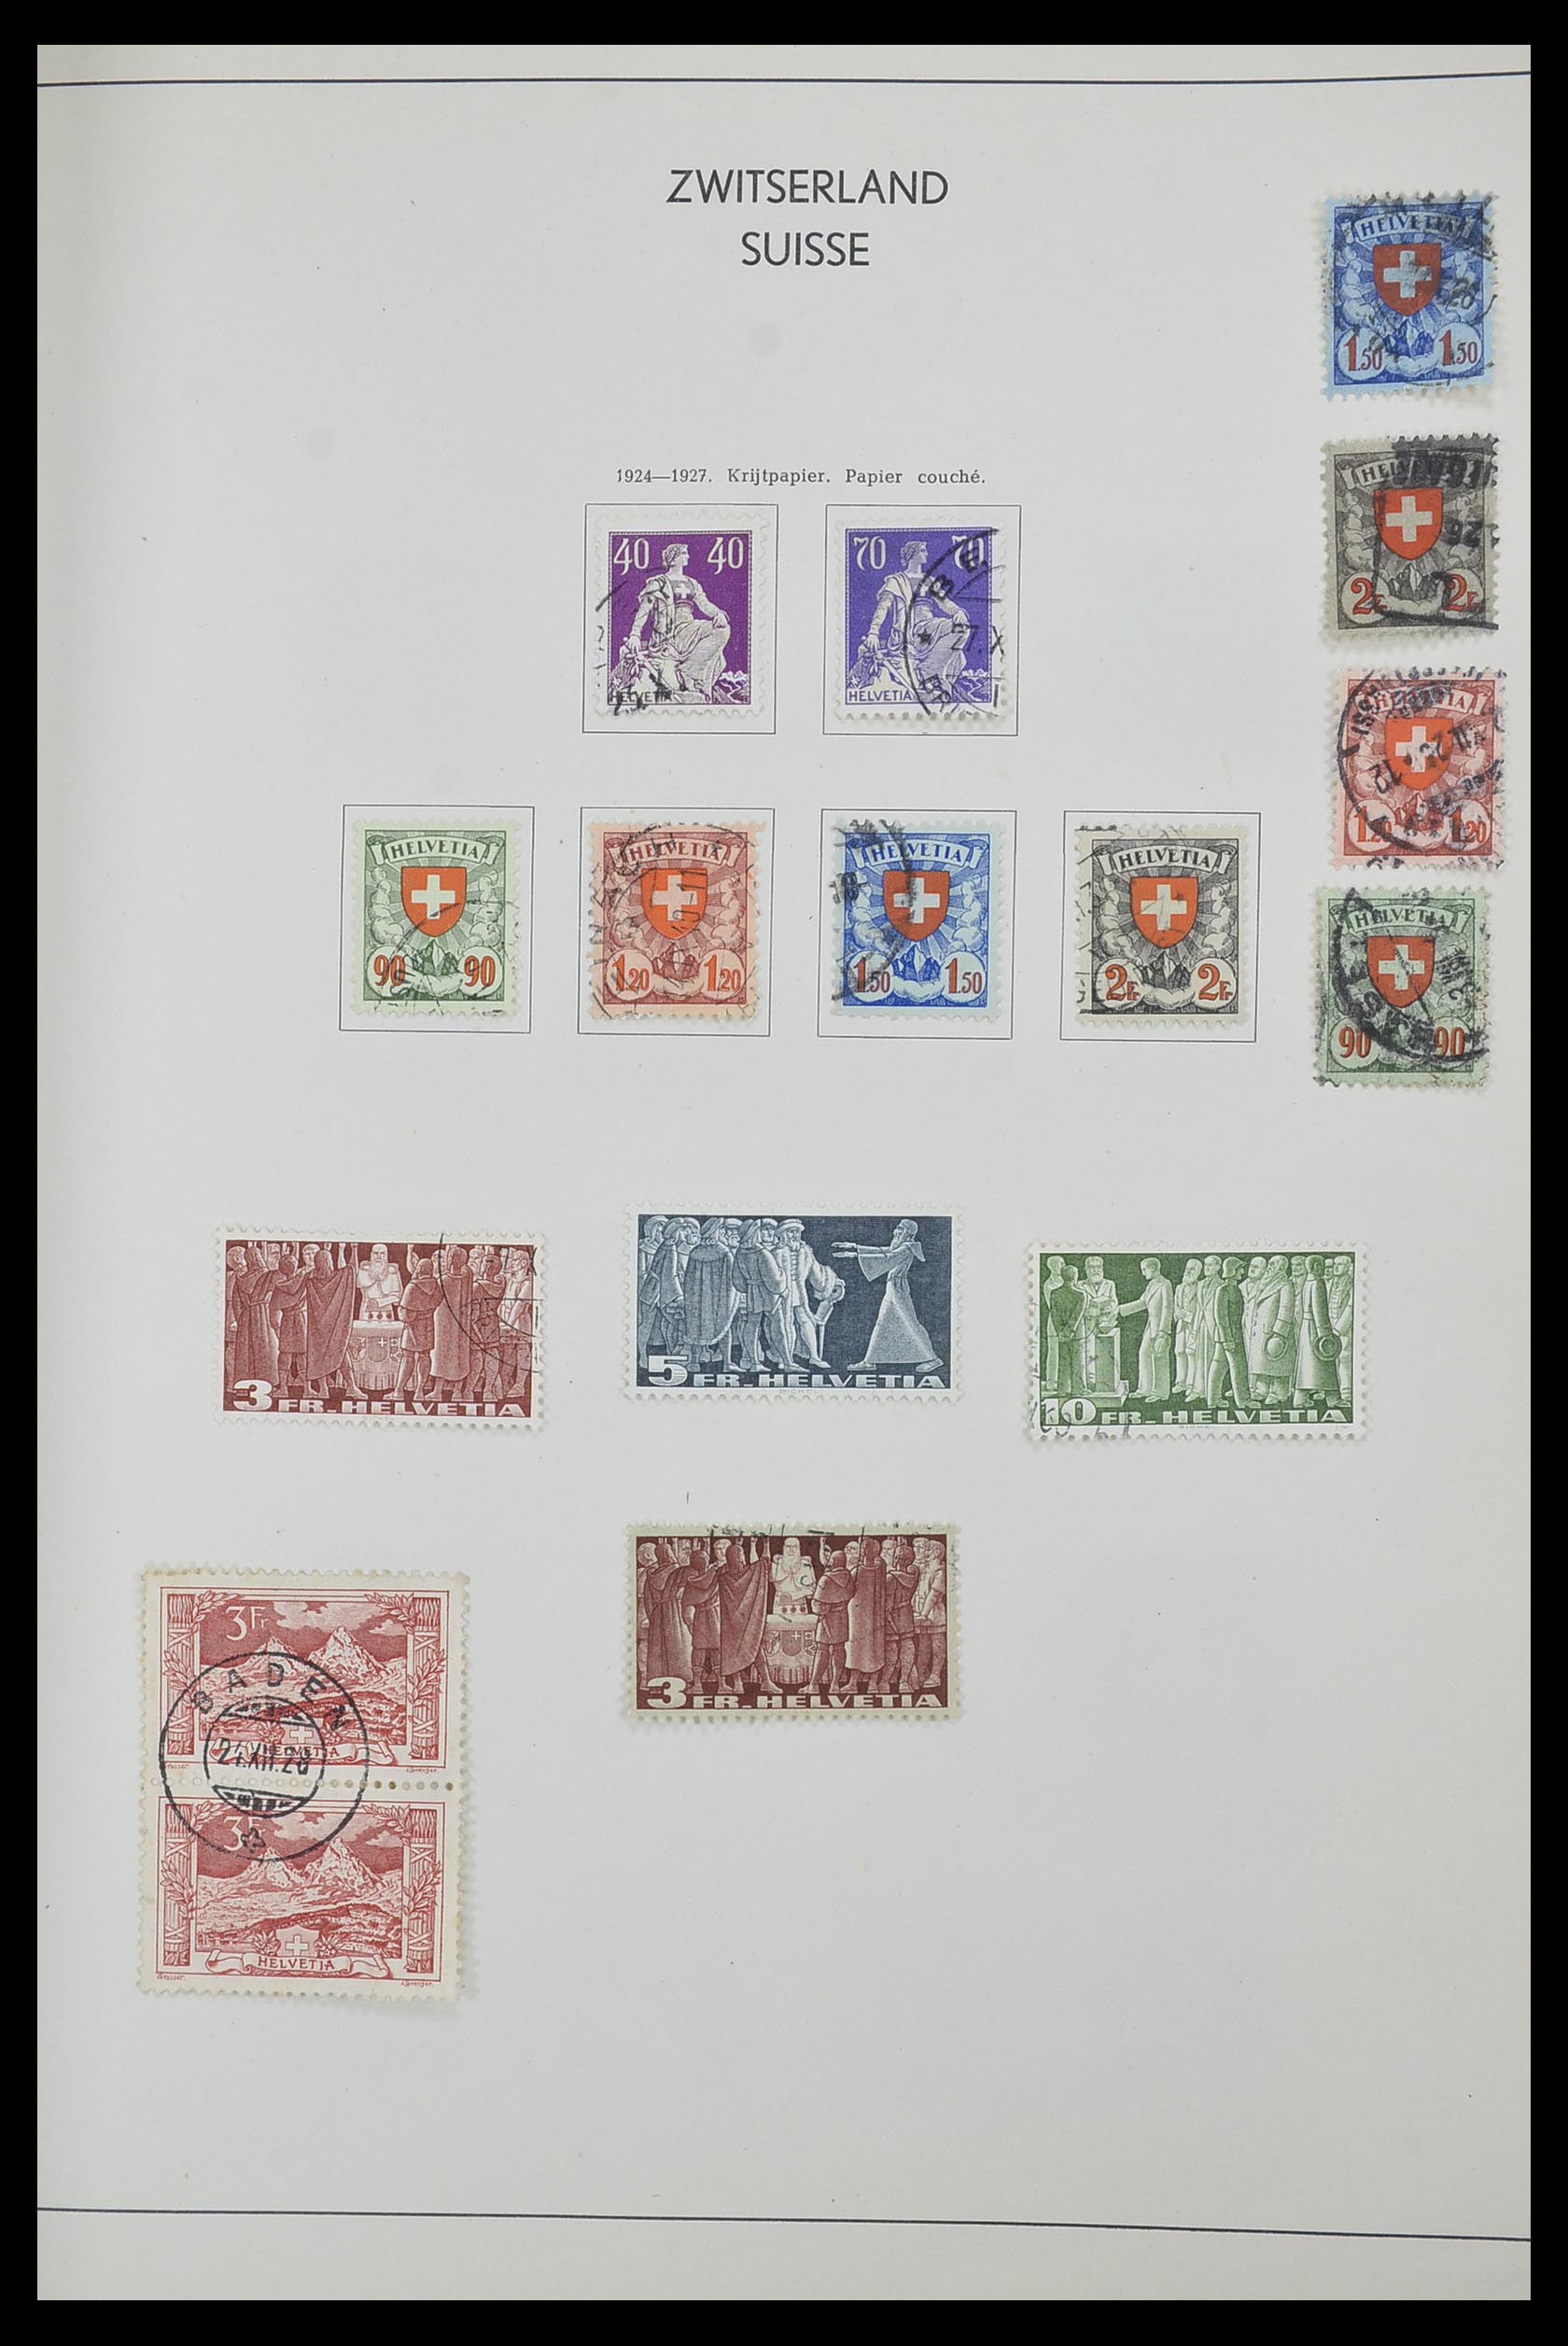 33601 013 - Stamp collection 33601 Switzerland 1854-1985.